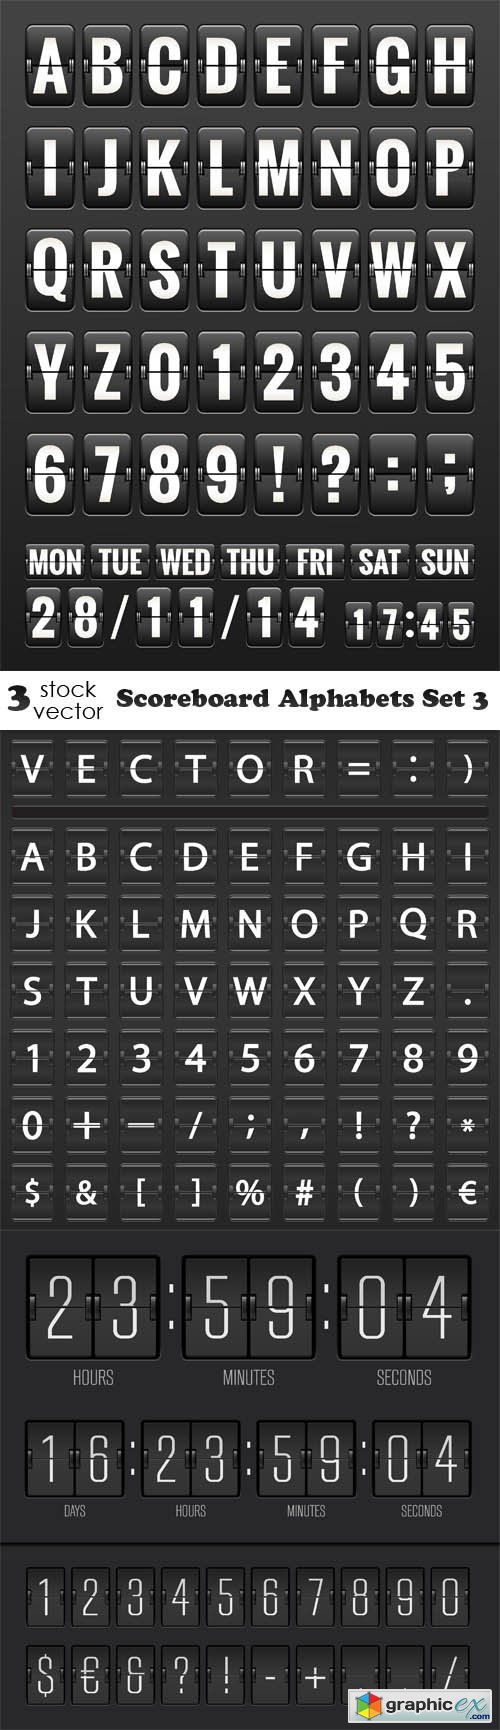 Scoreboard Alphabets Set 3